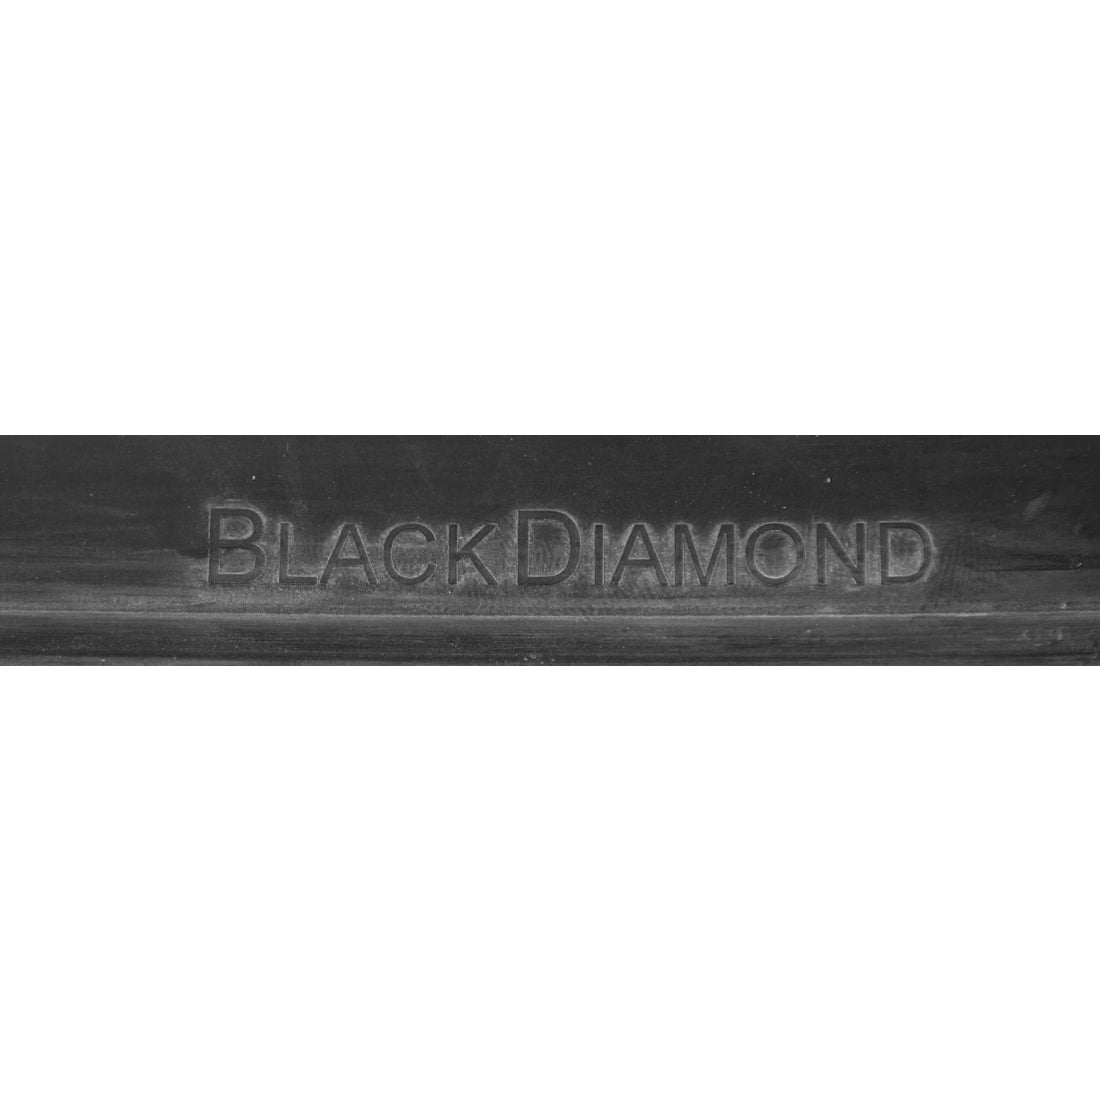 BlackDiamond Round Top Rubber Logo View